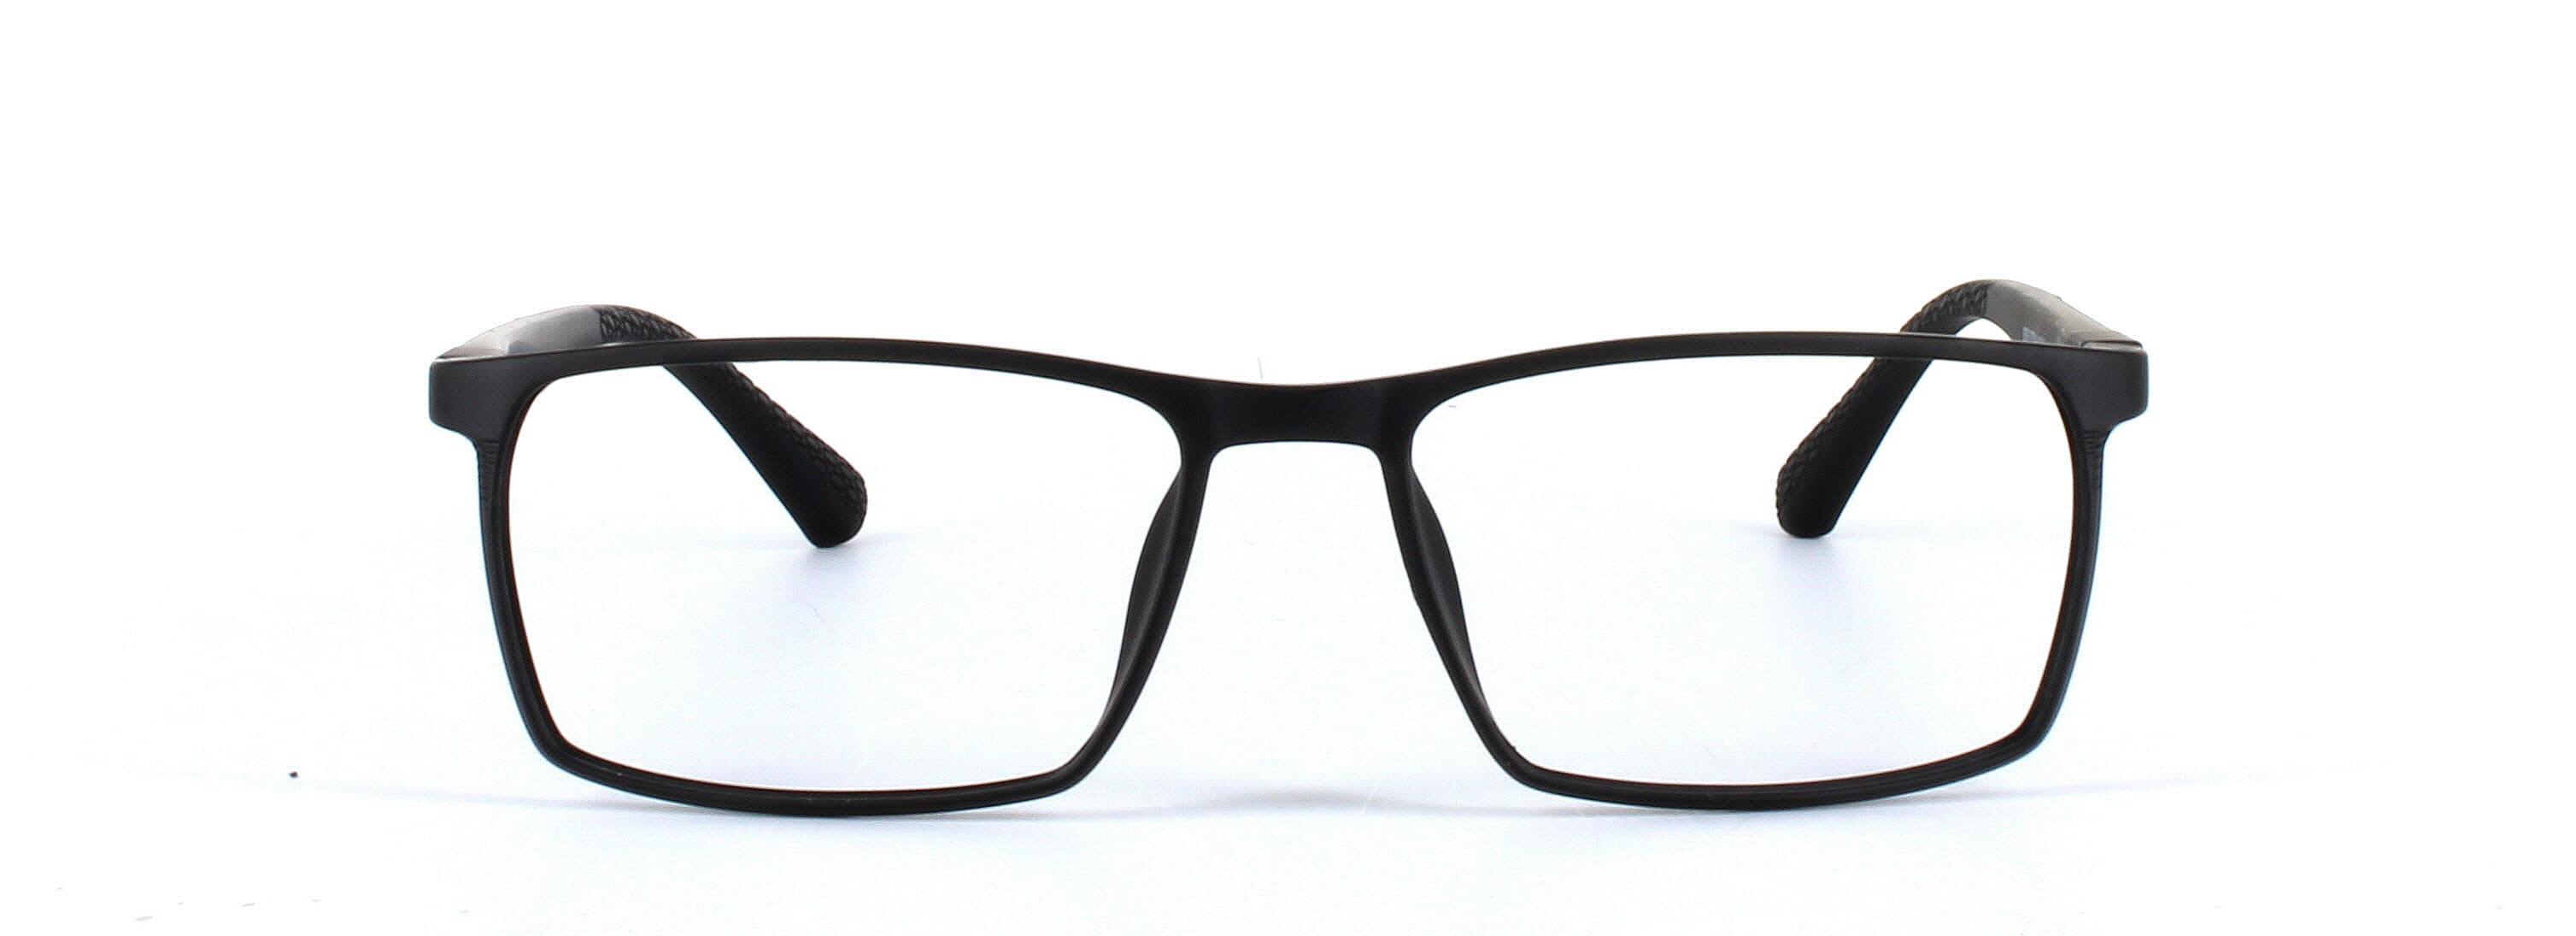 Roman Black Full Rim TR90 Glasses - Image View 5